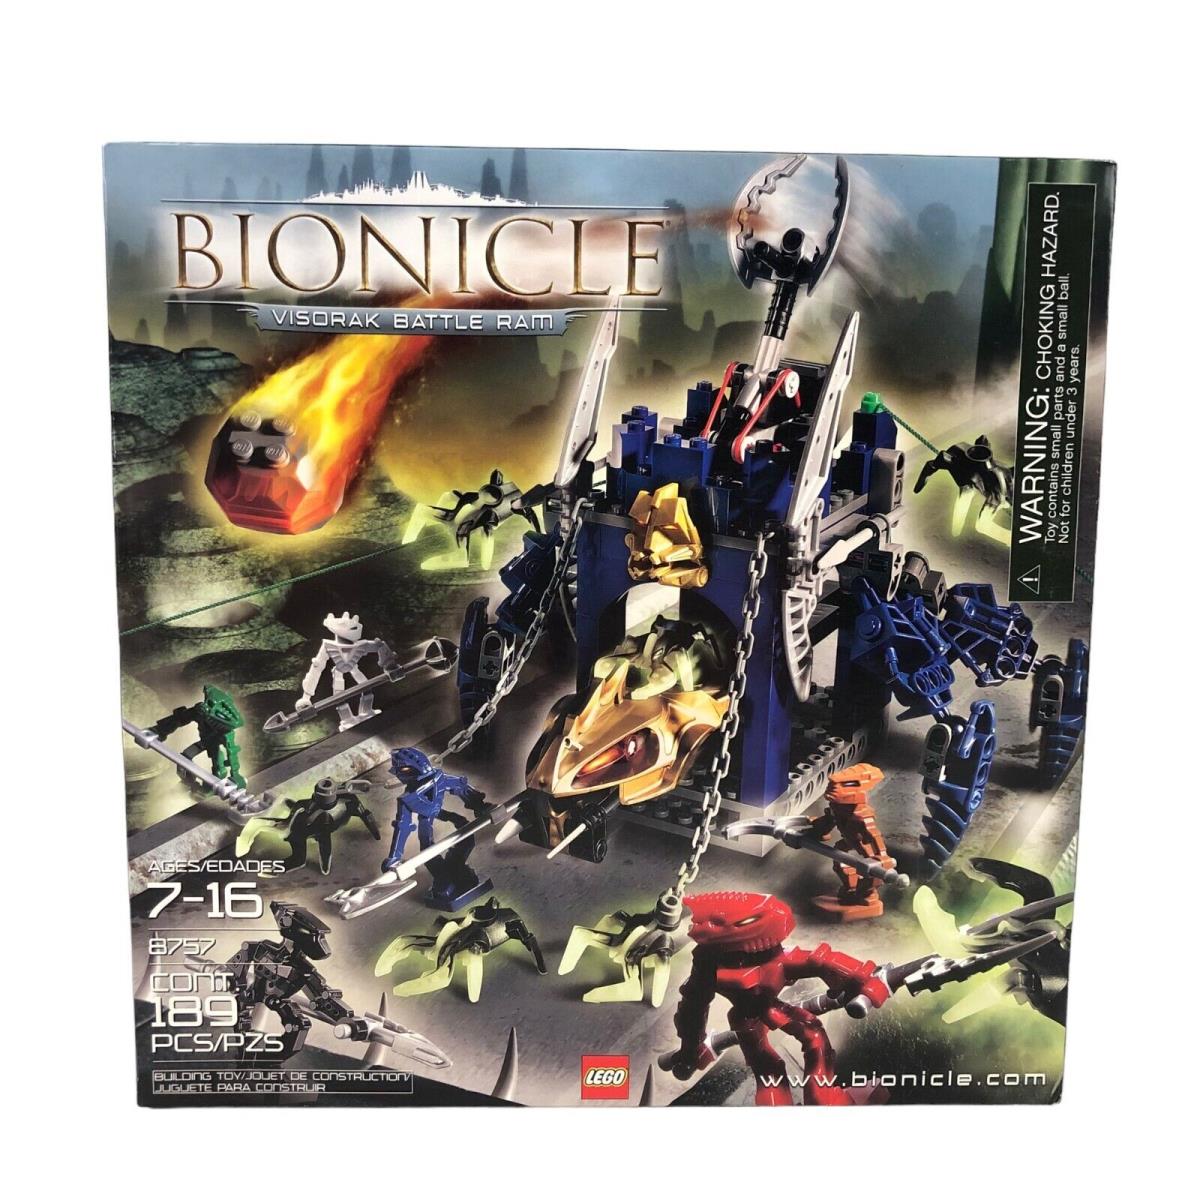 Lego Bionicle: Visorak Battle Ram 8757